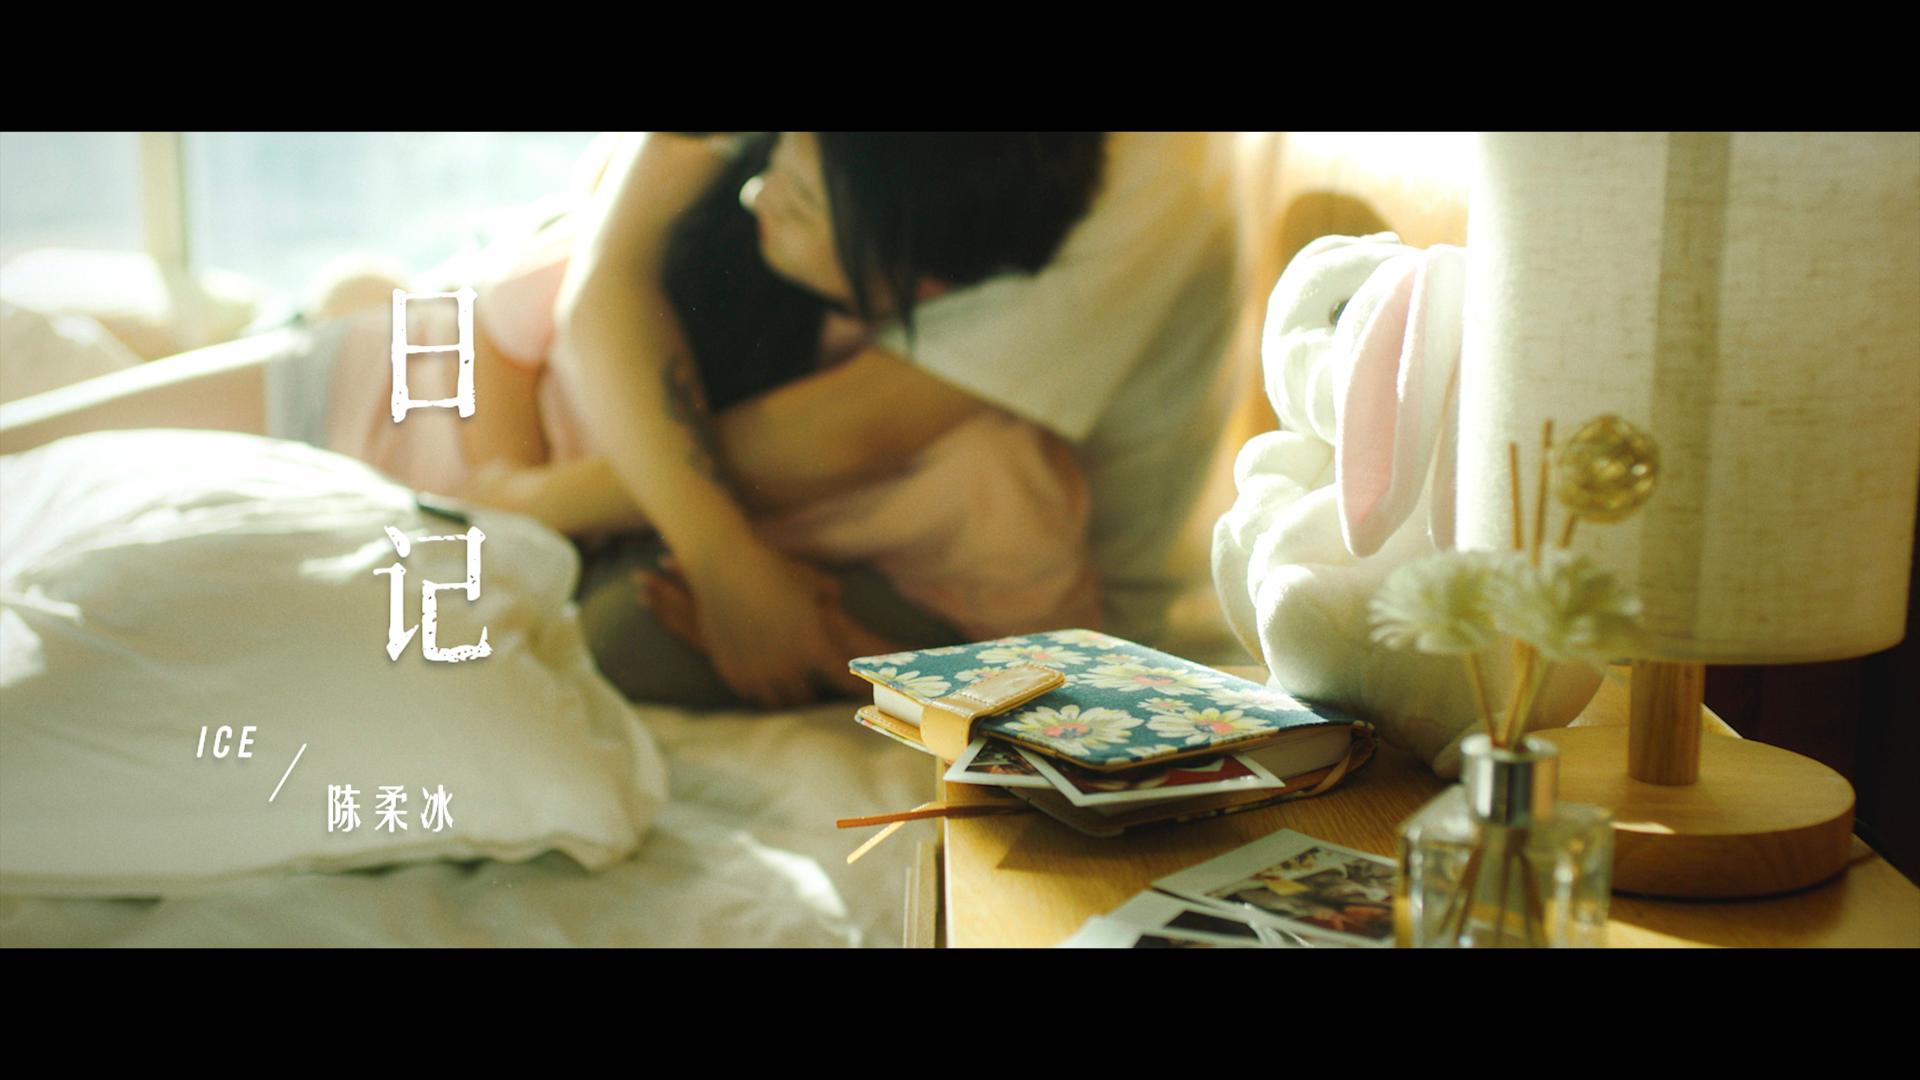 陈柔冰Ice - 日记 (Official Music Video)